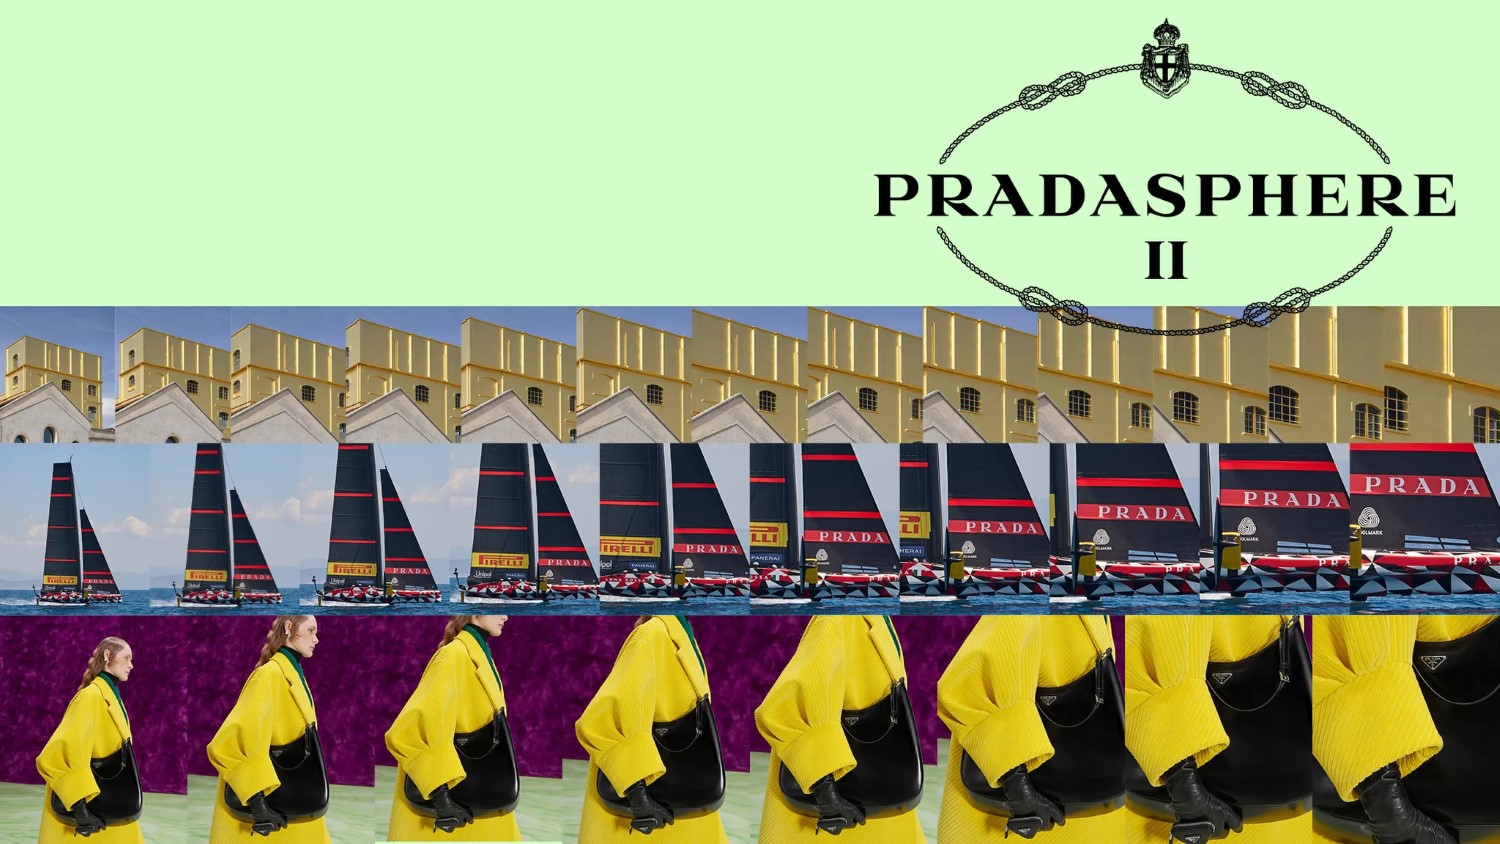 Shanghai welcomes Prada's second Pradasphere